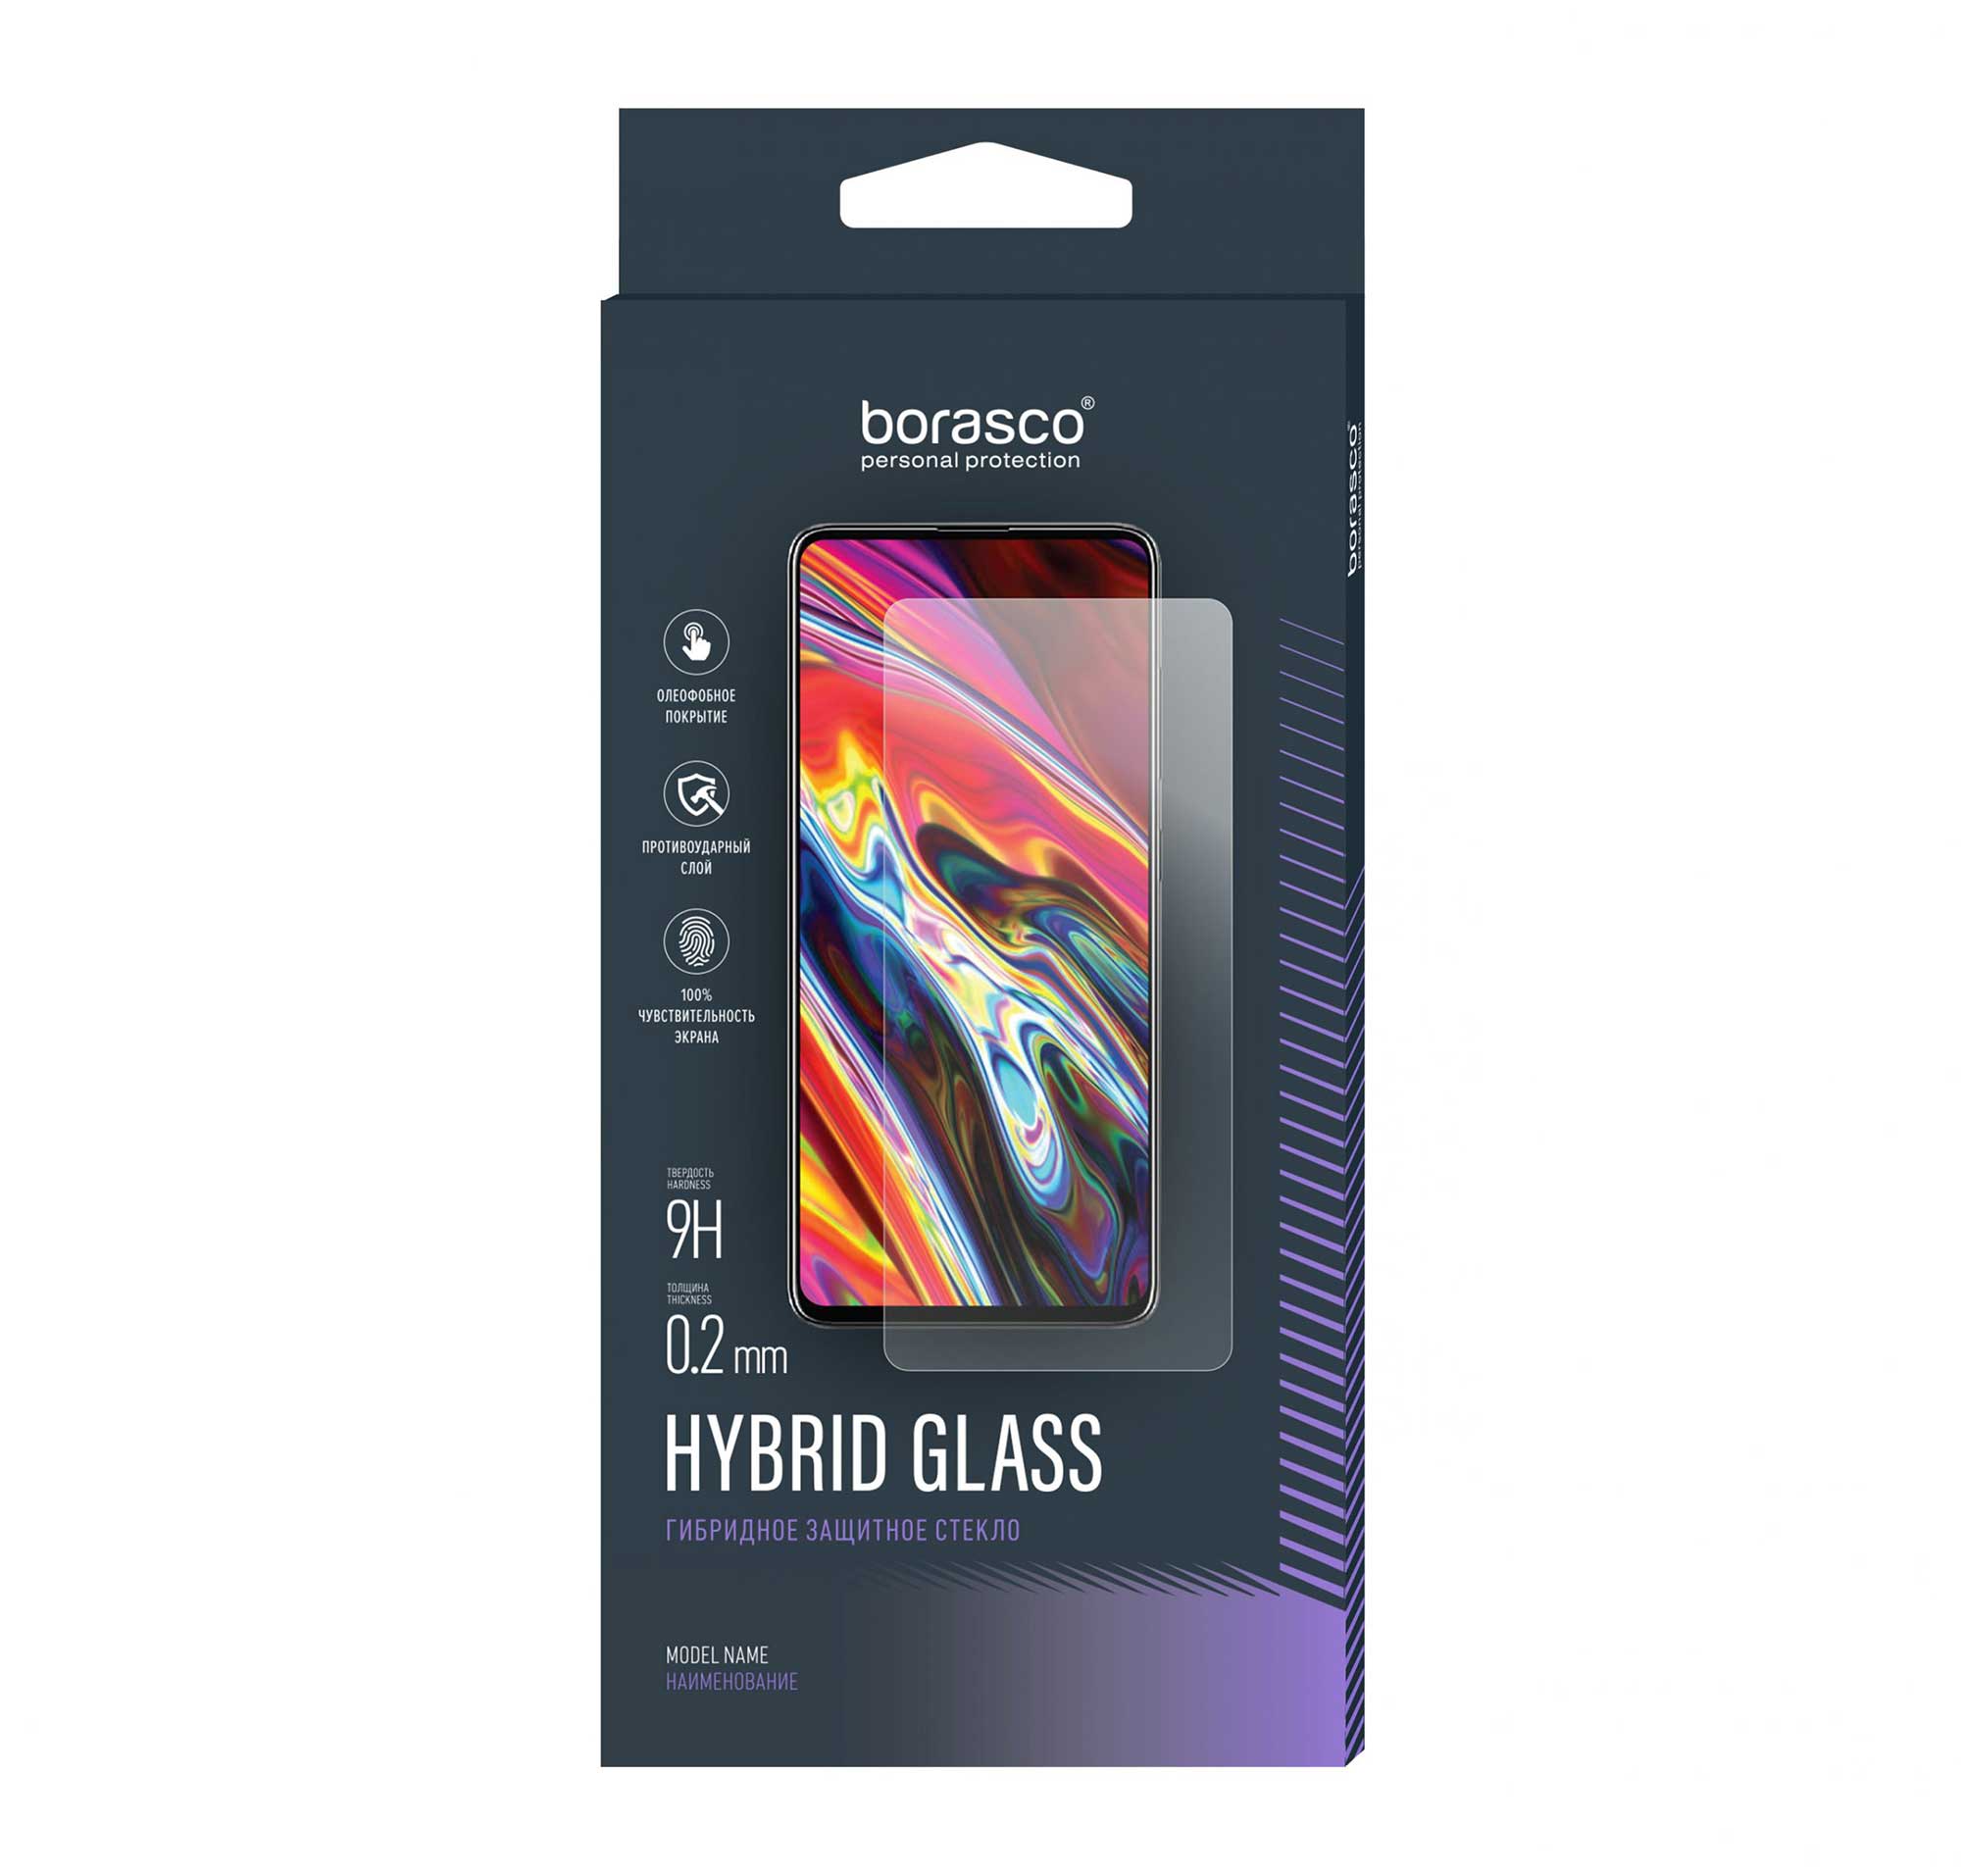 Защитное стекло BoraSCO Hybrid Glass для Nokia 1 цена и фото